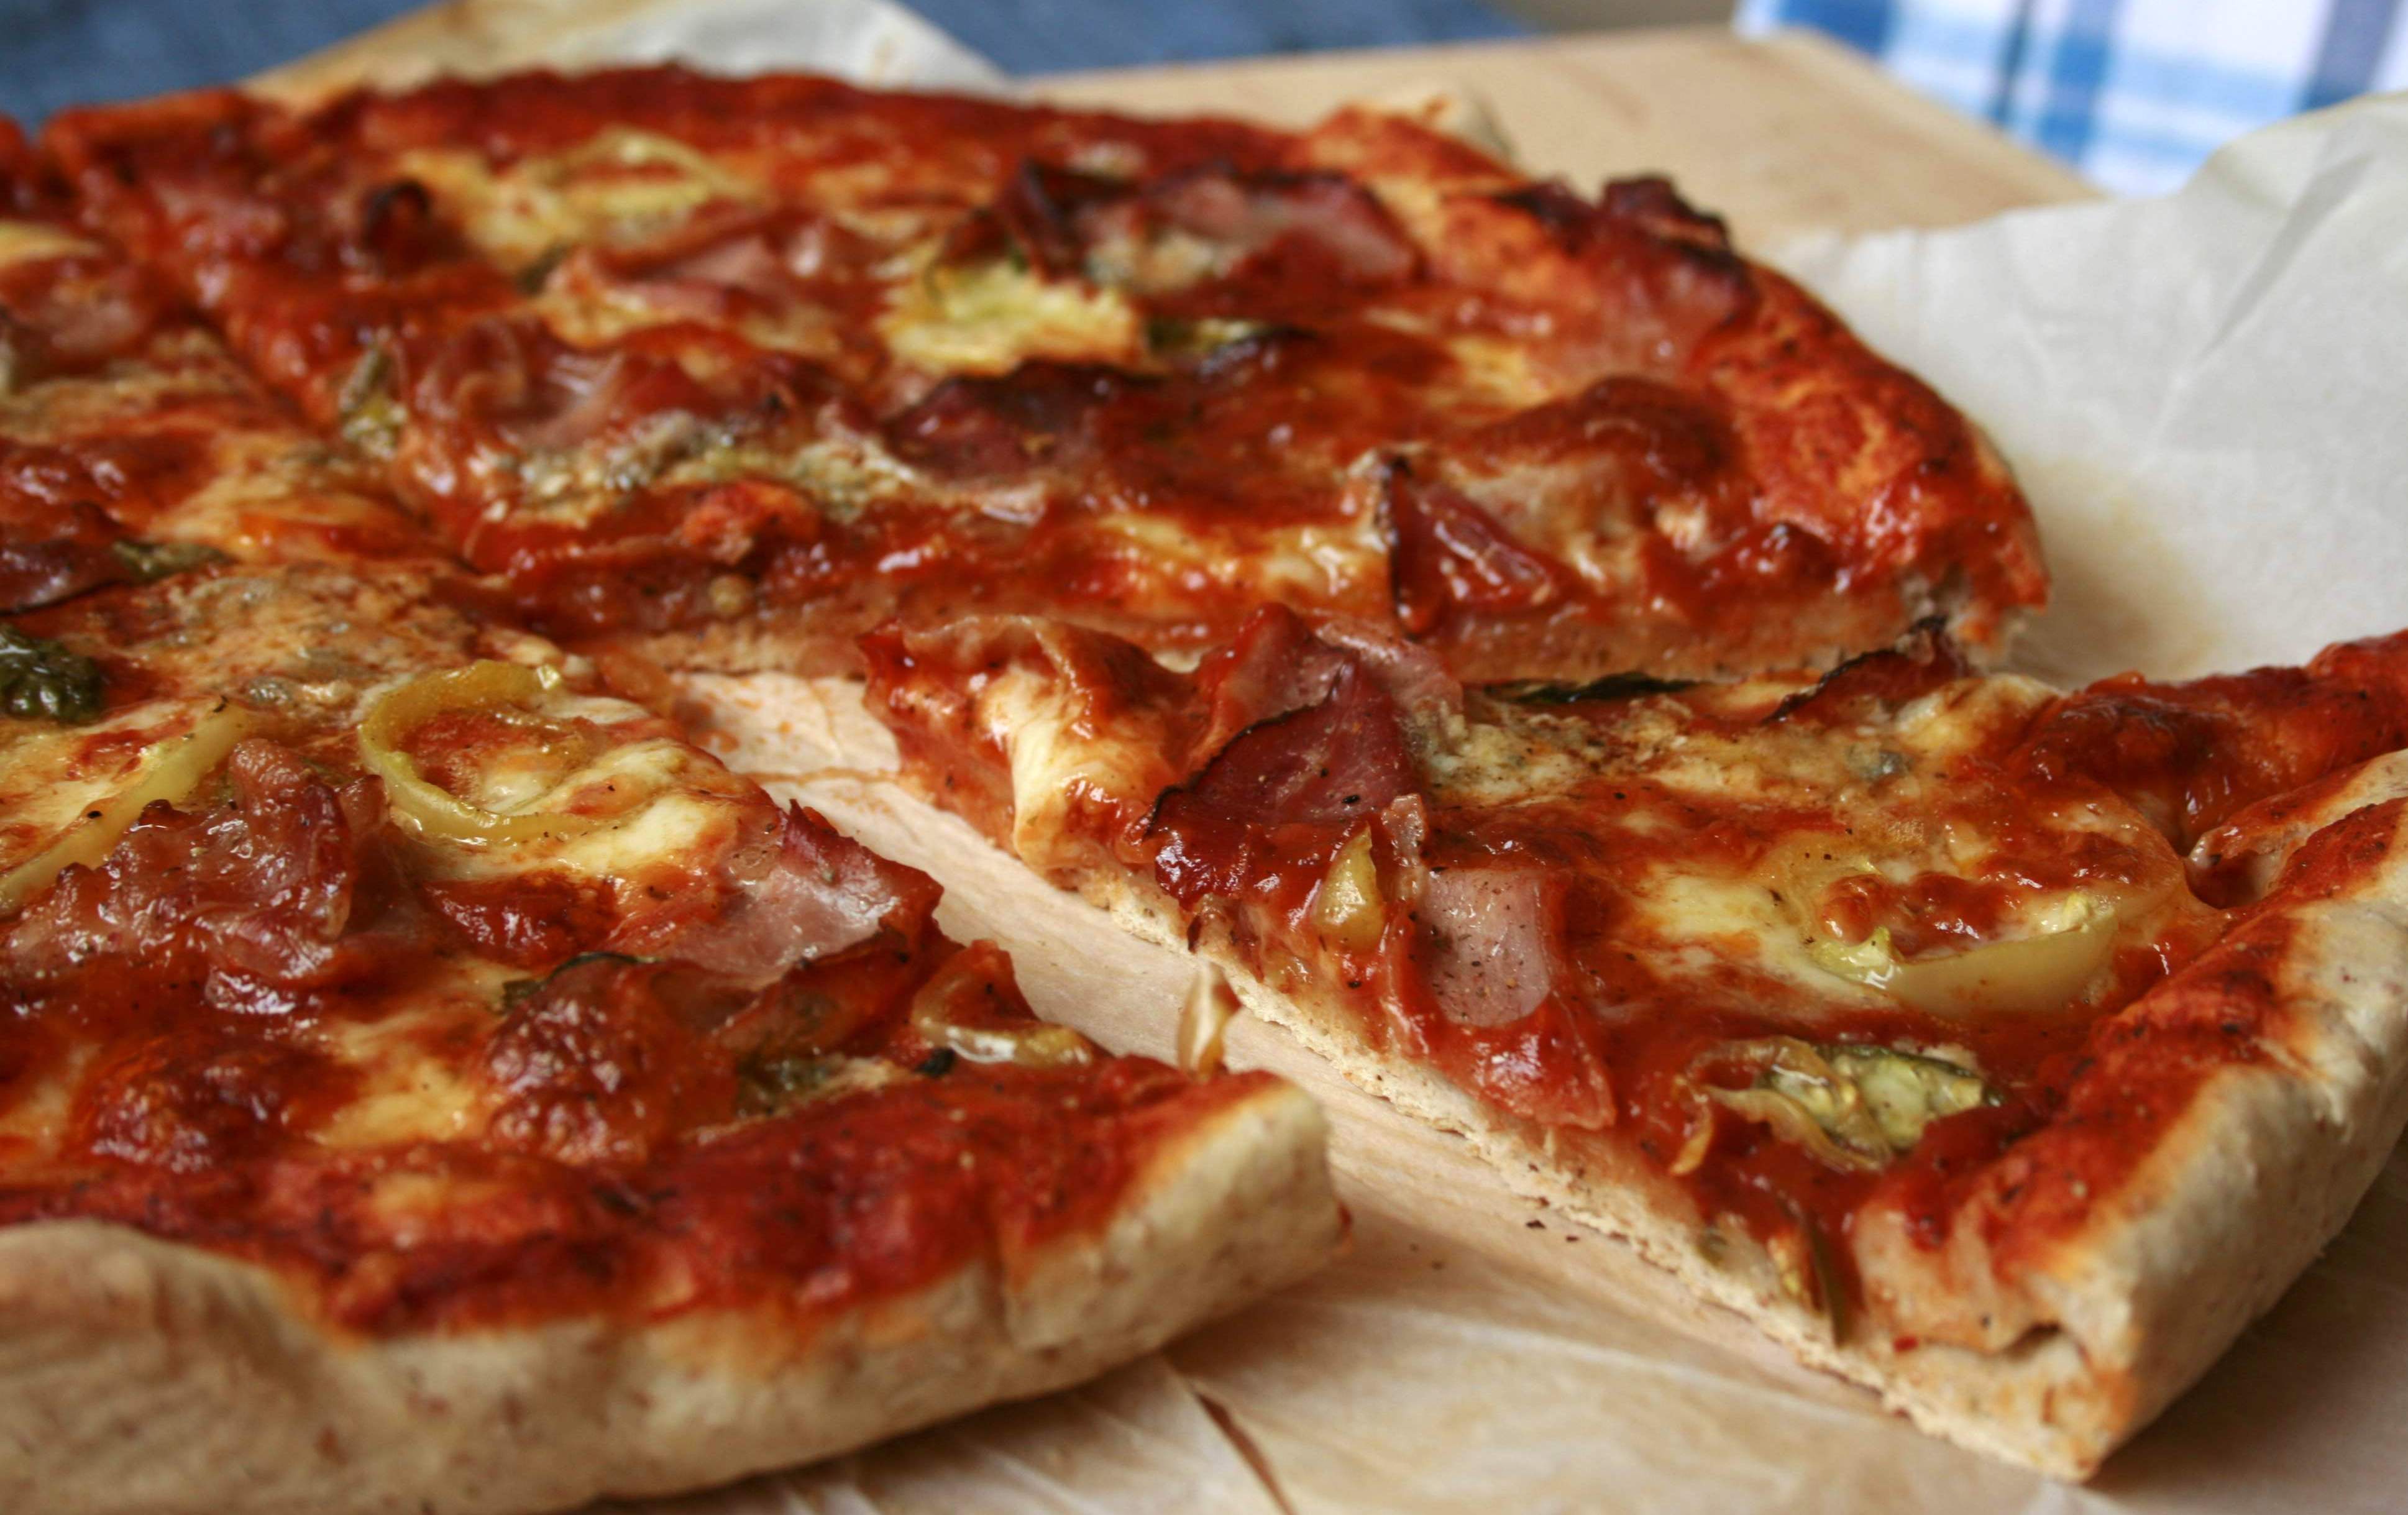 Cata drojdie se pune la 1kg de faina pentru Pizza